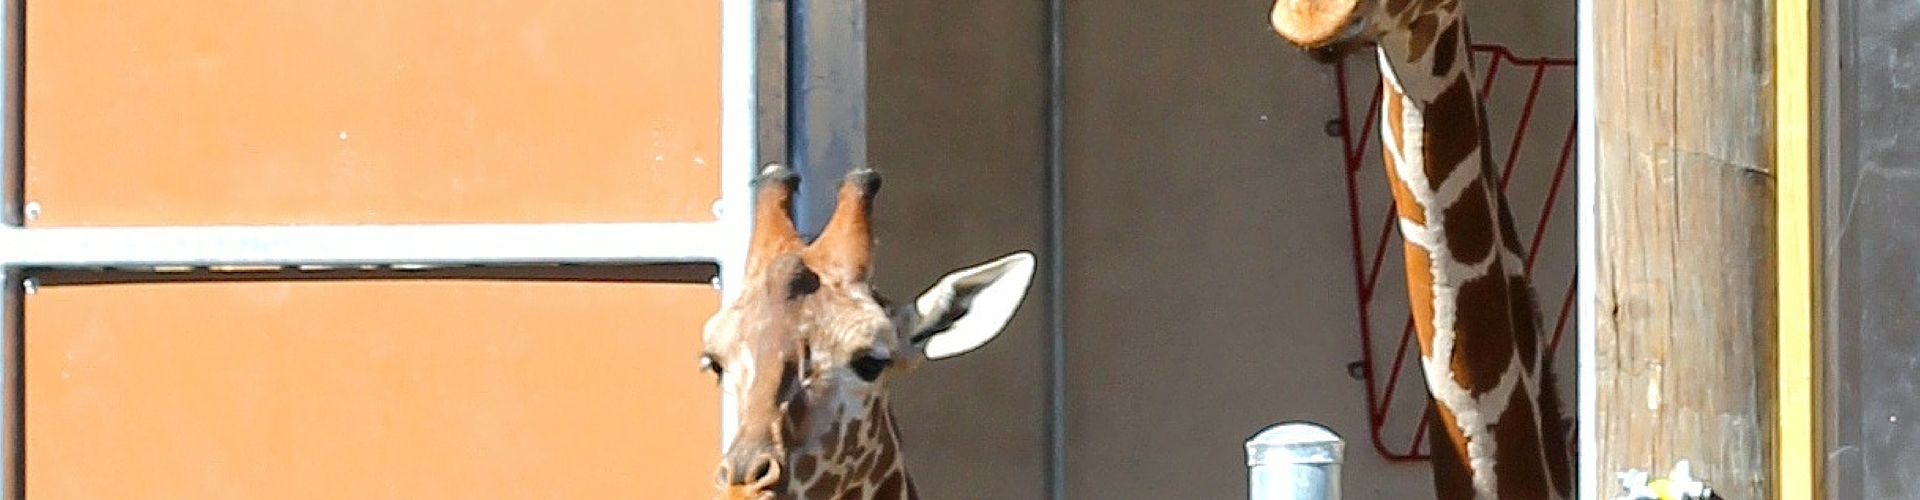 Haute Tip: Feed Giraffes at the San Antonio Zoo!